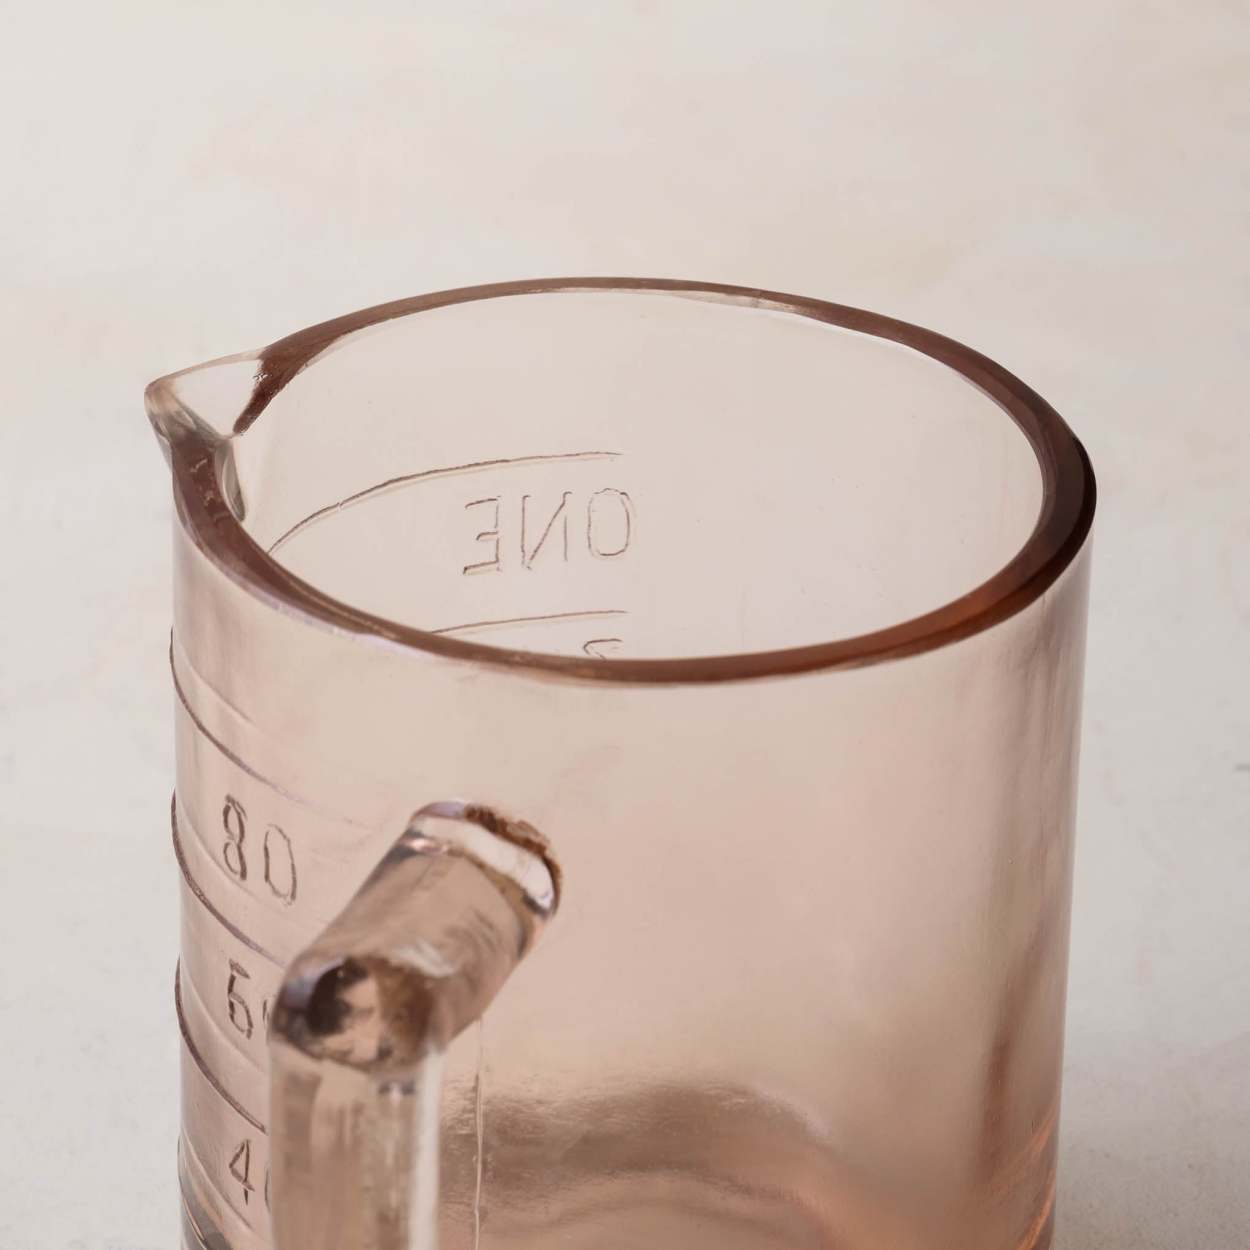 Magnolia Glass Measuring Cup - Magnolia